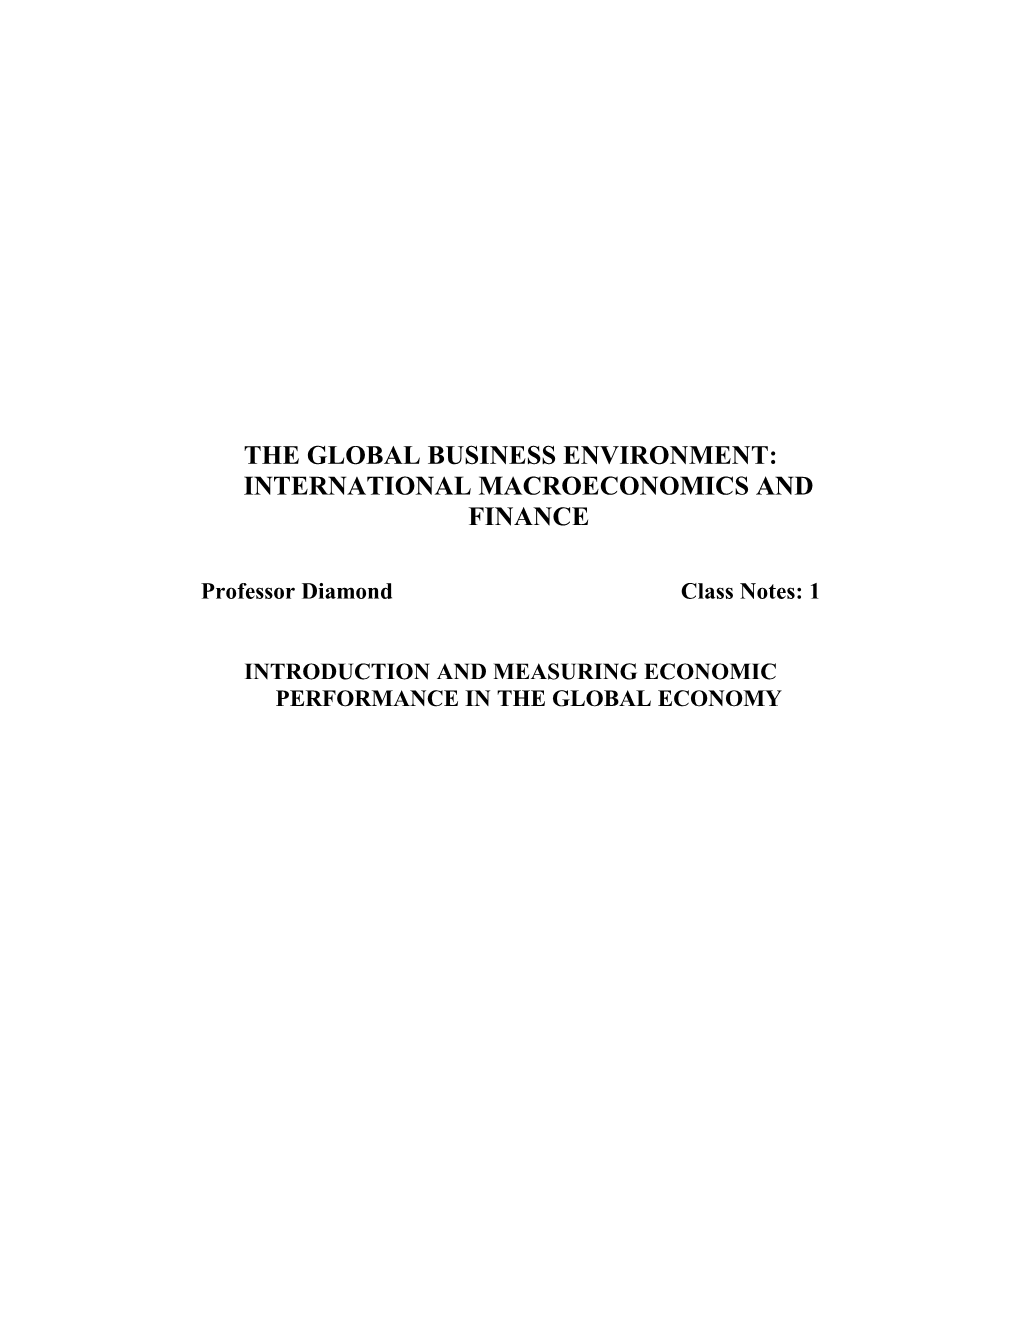 Global Business Environment: Macroeconomics